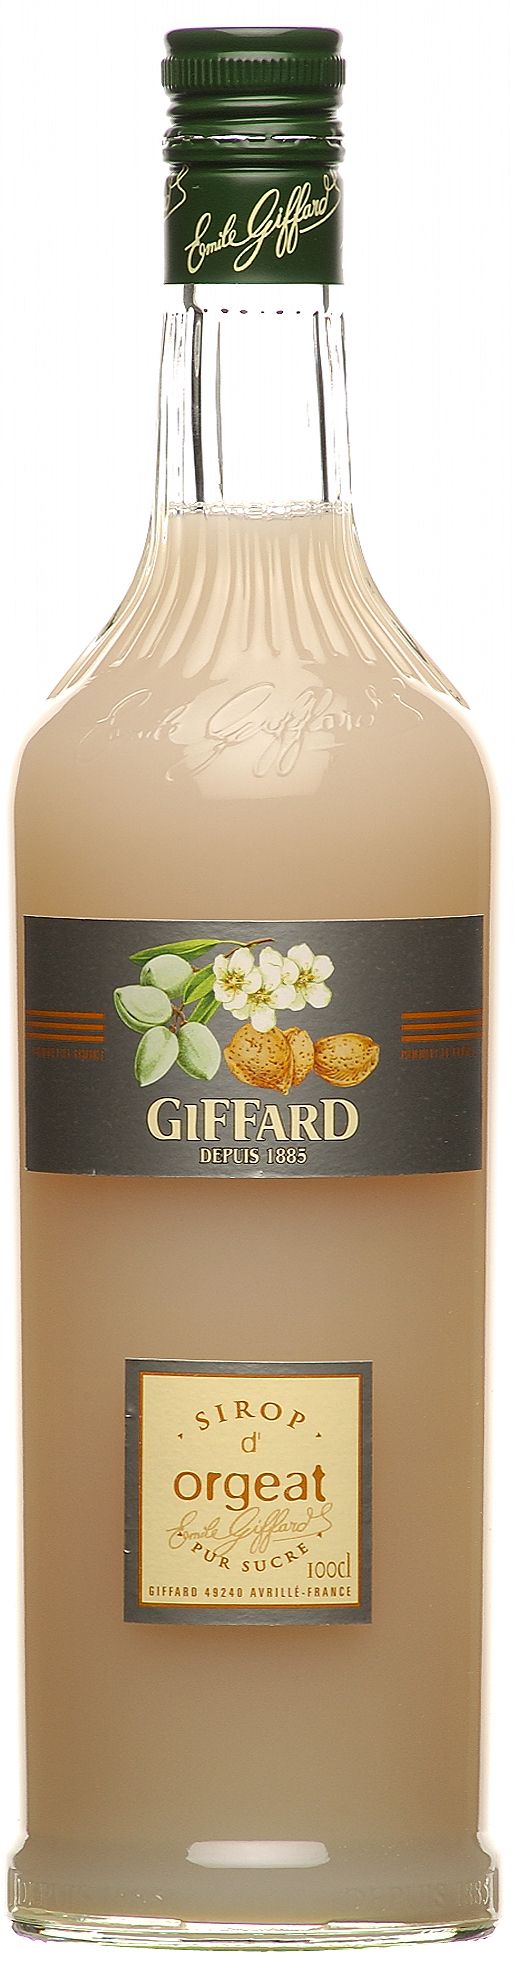 Giffard Sirop d'Orgeat - Almond Syrup, France